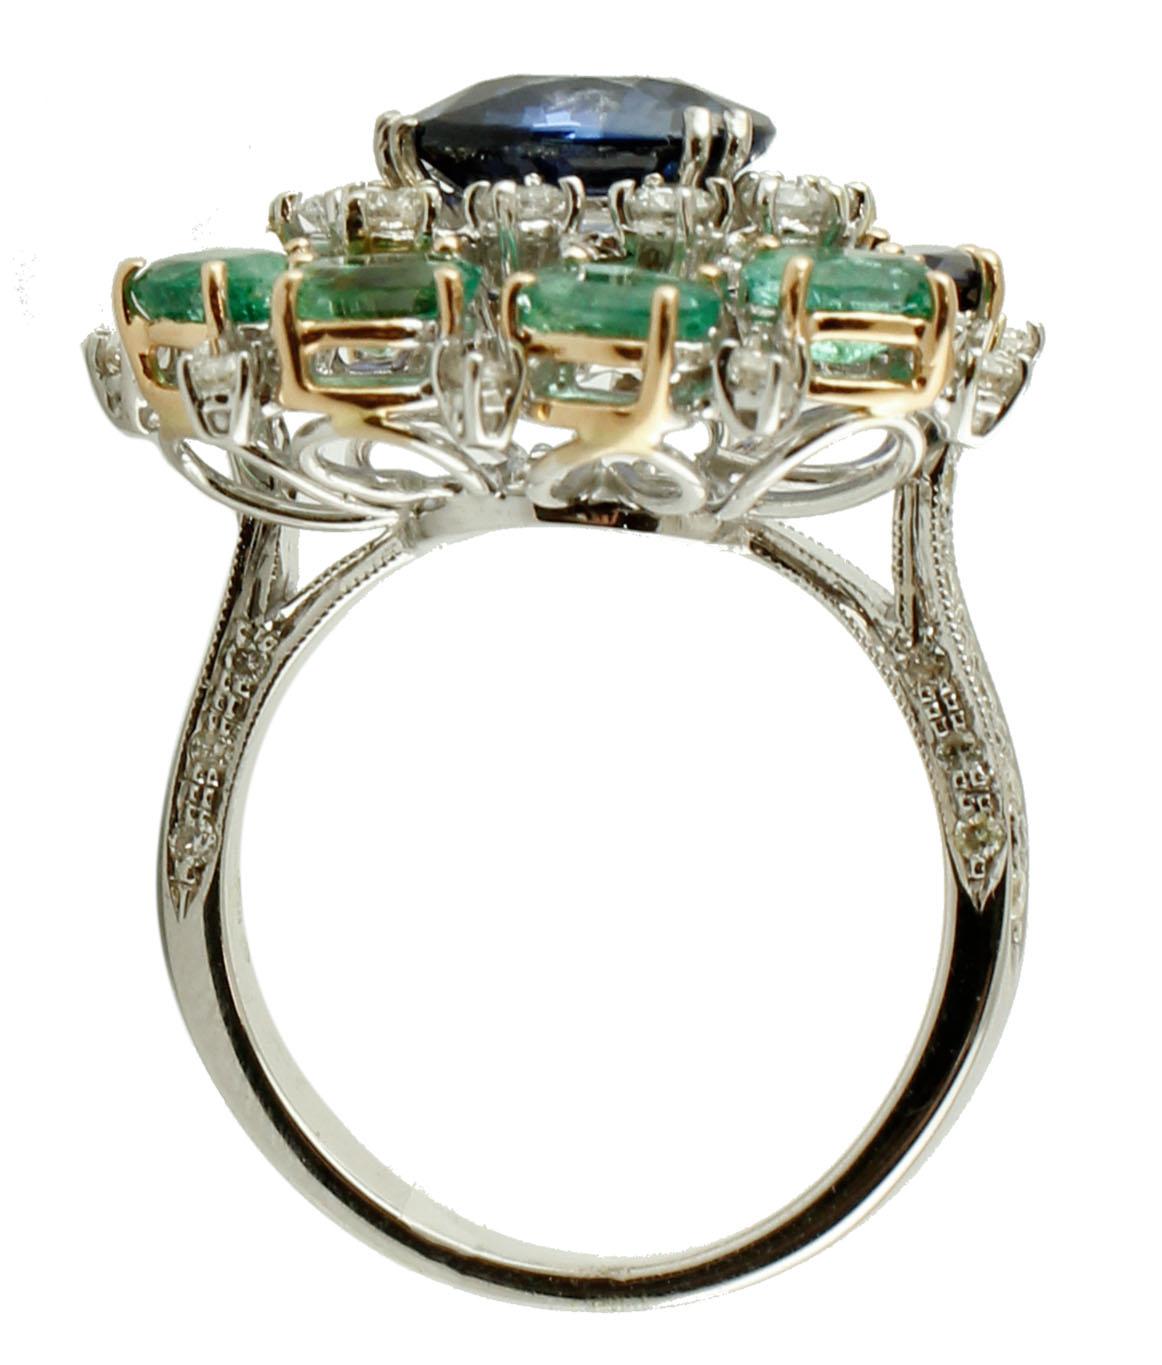 Mixed Cut Diamonds, Blue Sapphires, Emeralds, 14 Karat White Gold Heart Ring